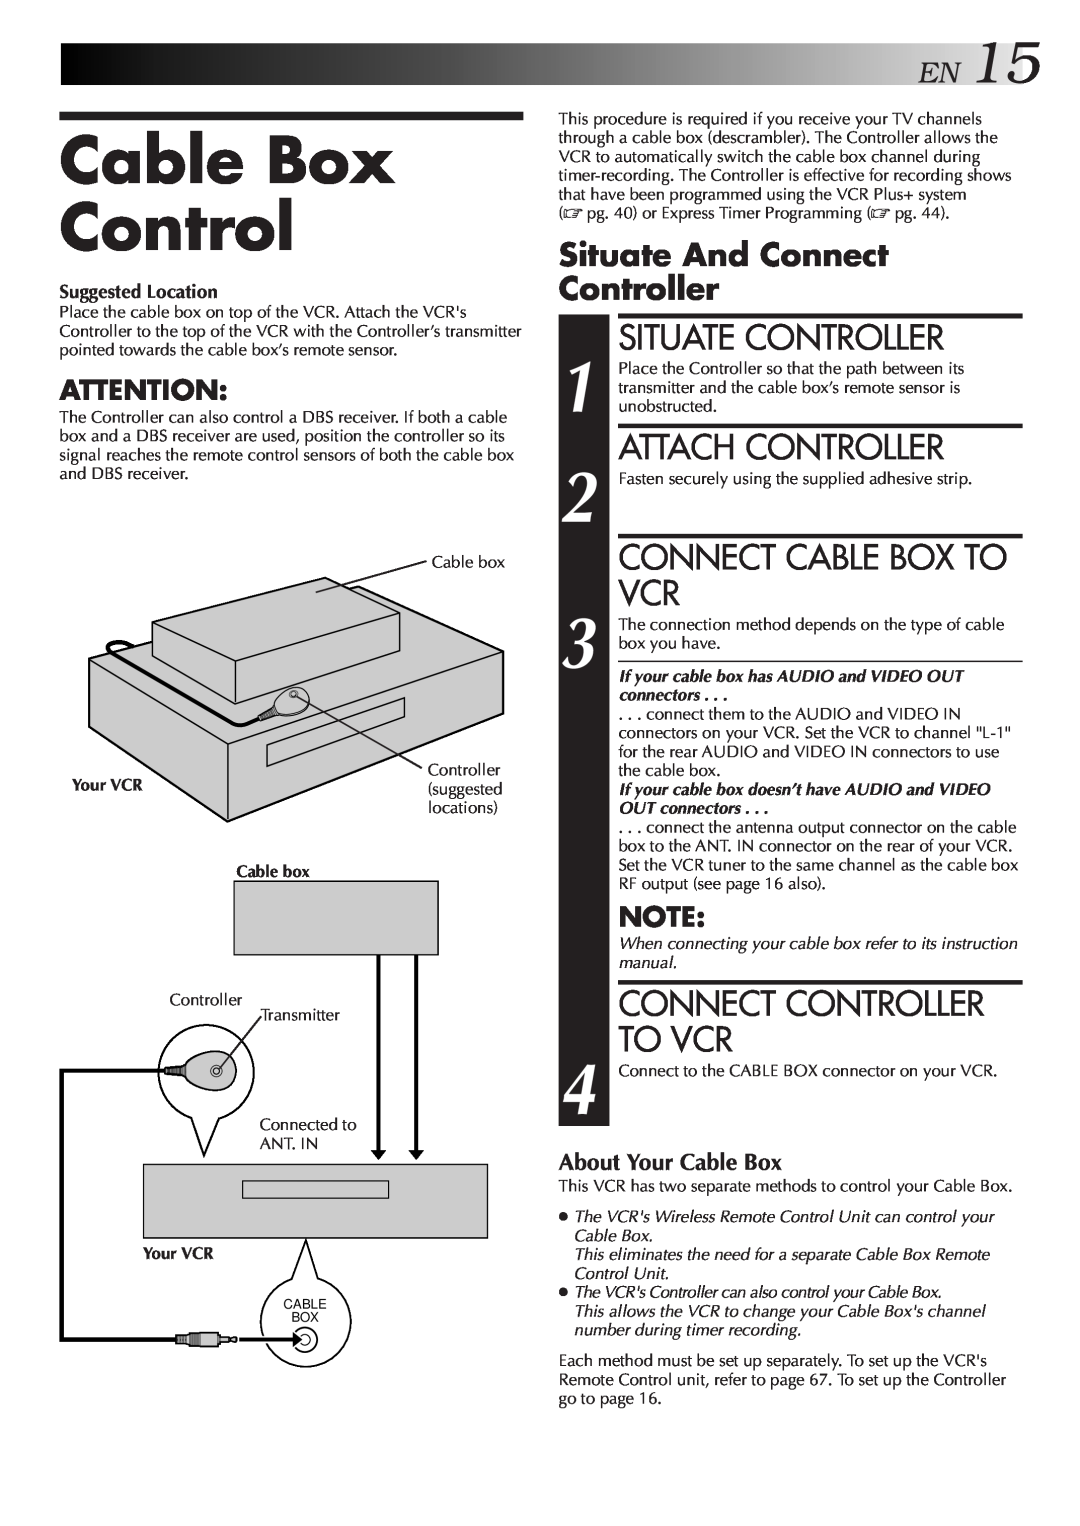 JVC Model HR-DVS1U Cable Box Control, Situate Controller, Attach Controller, Connect Cable Box To Vcr, EN15, Cable box 